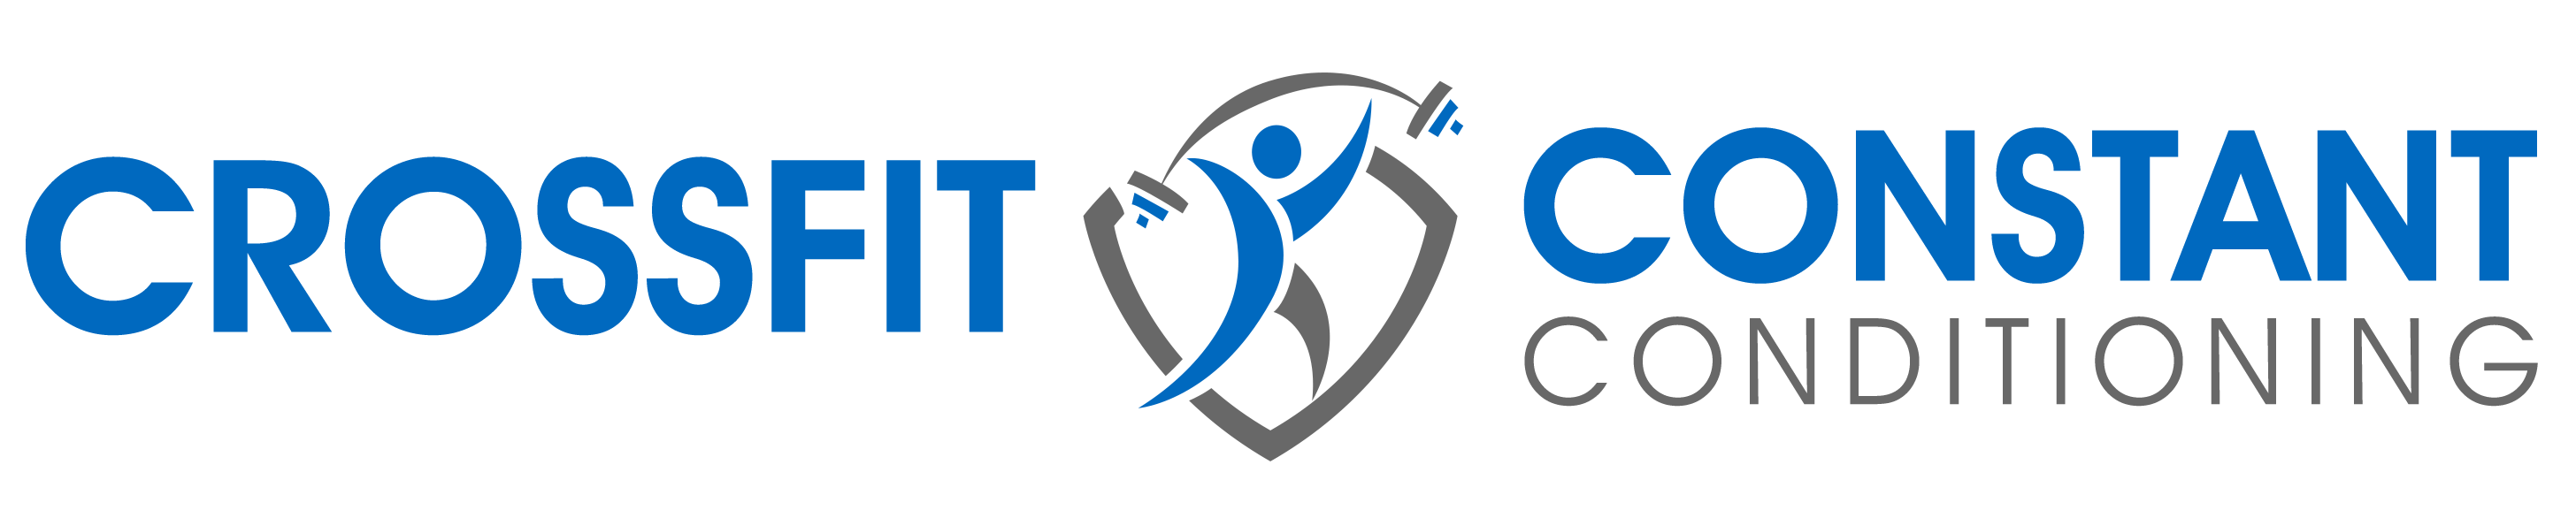 CrossFit Constant Conditioning logo